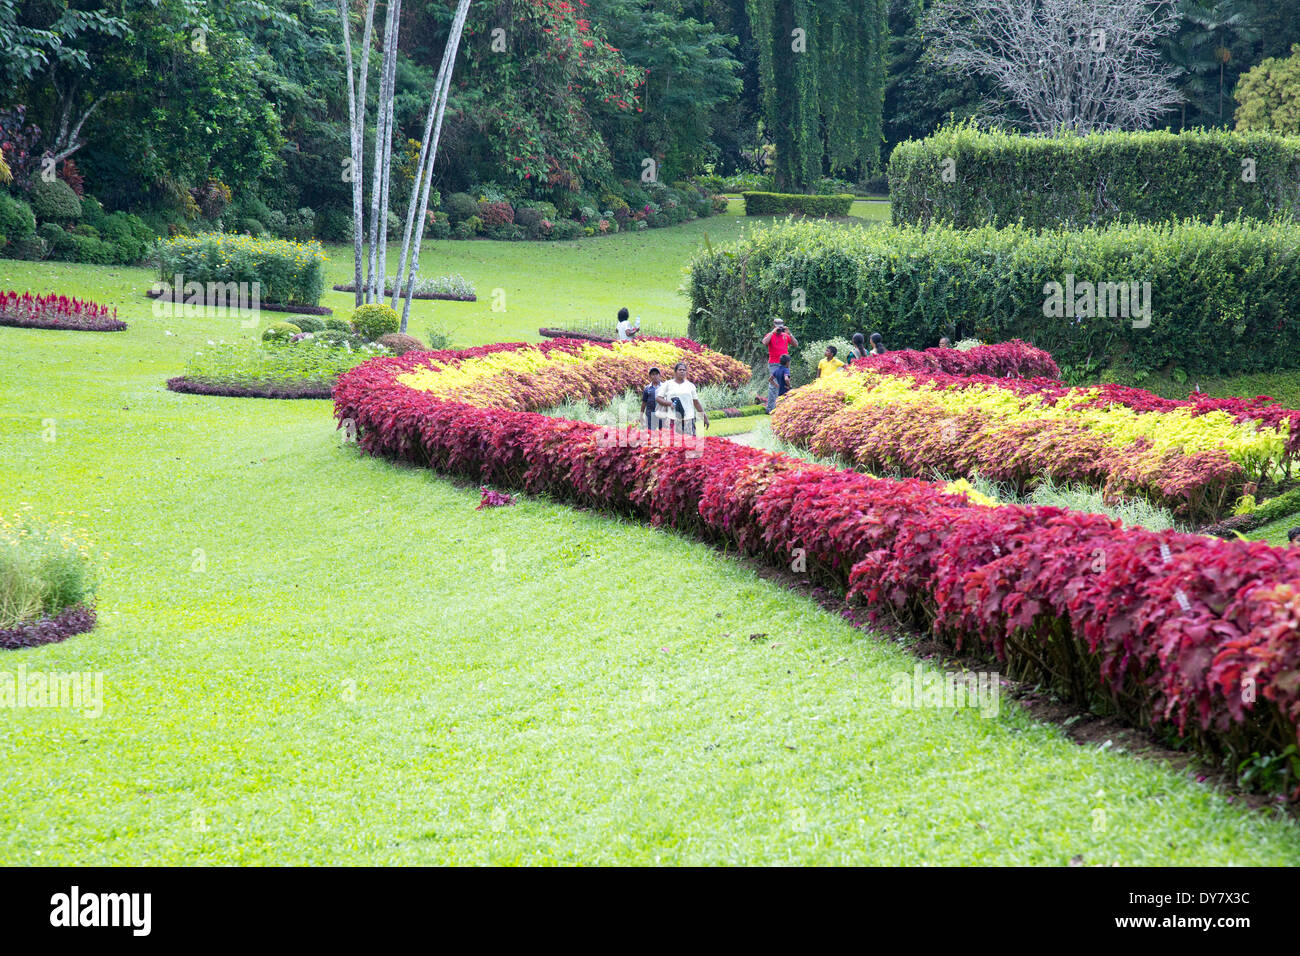 Jardins botaniques royaux, Peradeniya, Kandy, Sri Lanka Banque D'Images